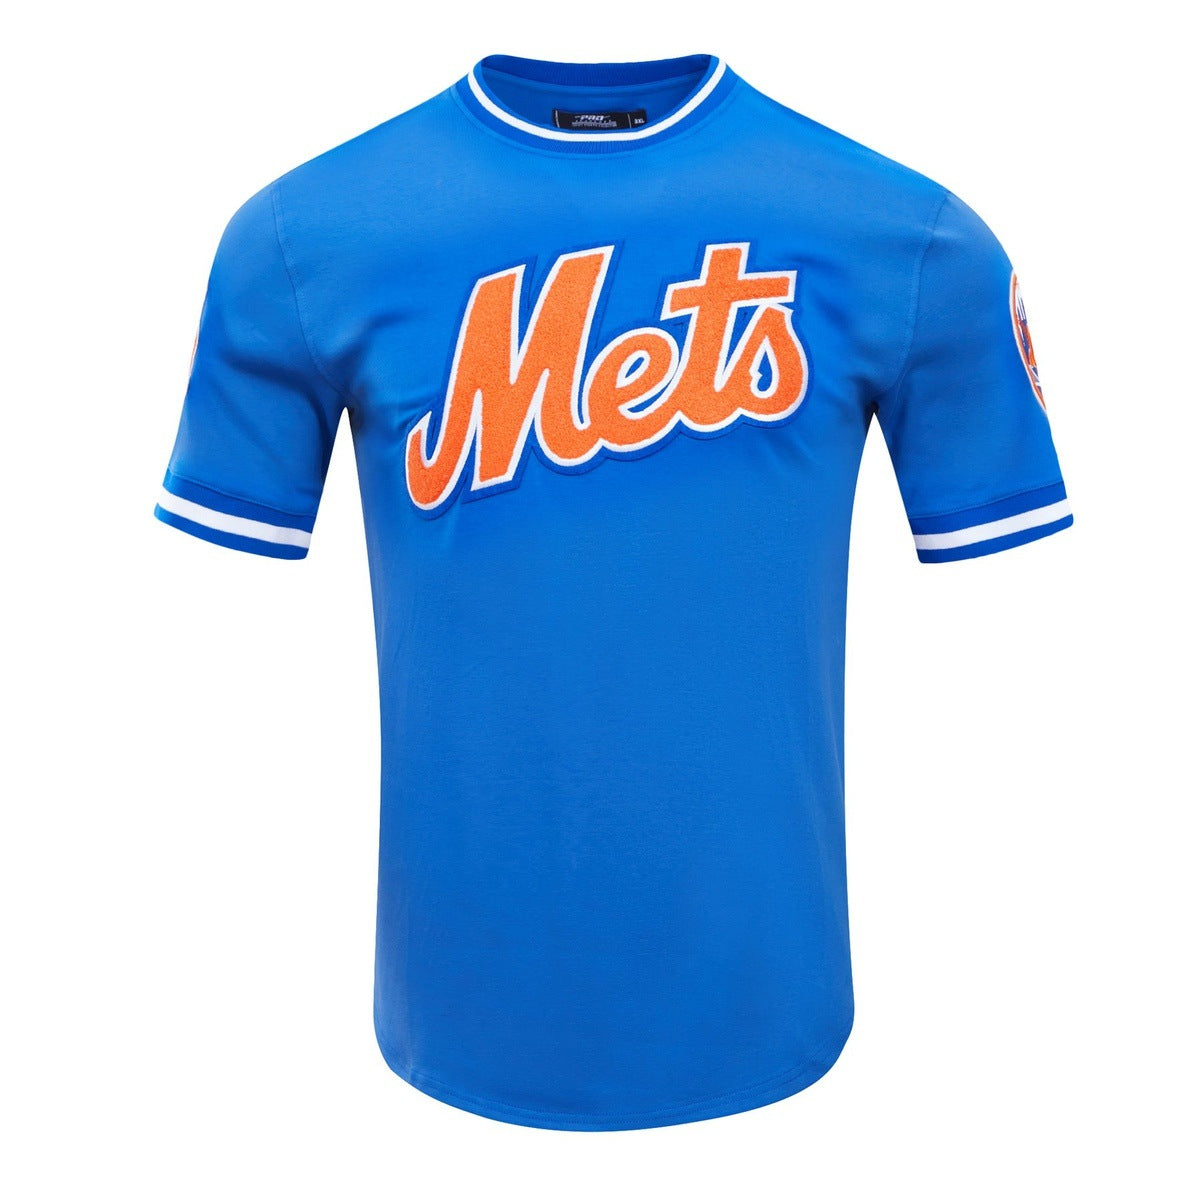 New York Mets Pro Standard Red, White & Blue T-Shirt - White